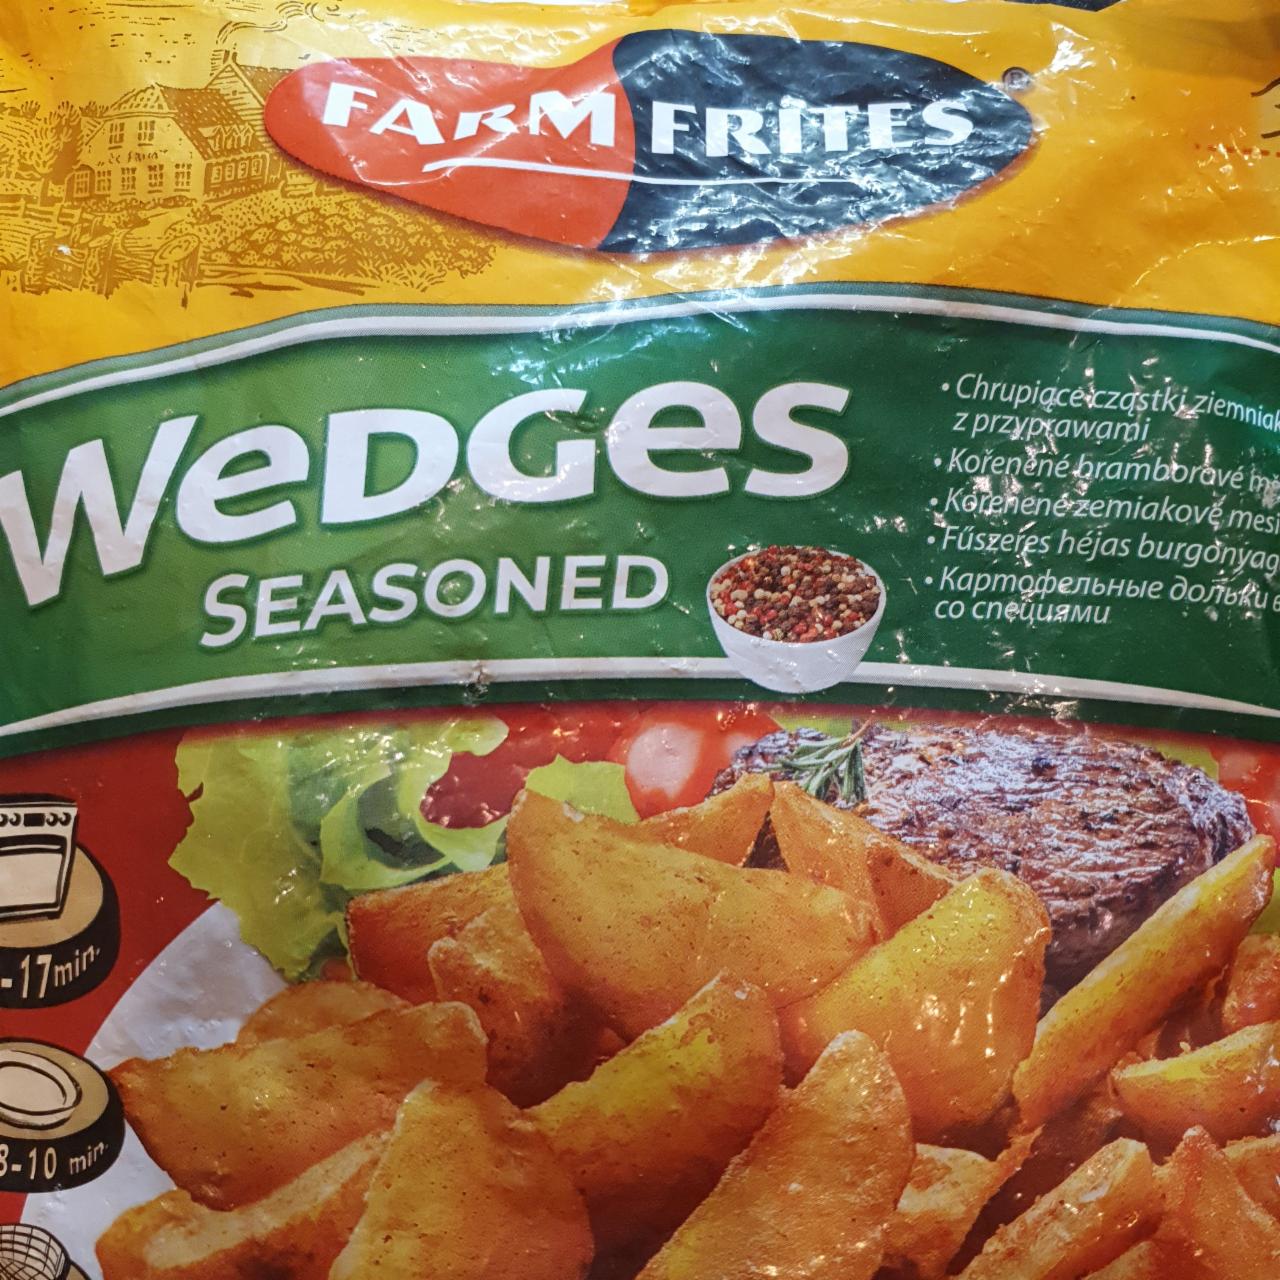 Fotografie - Wedges seasoned Farm frites